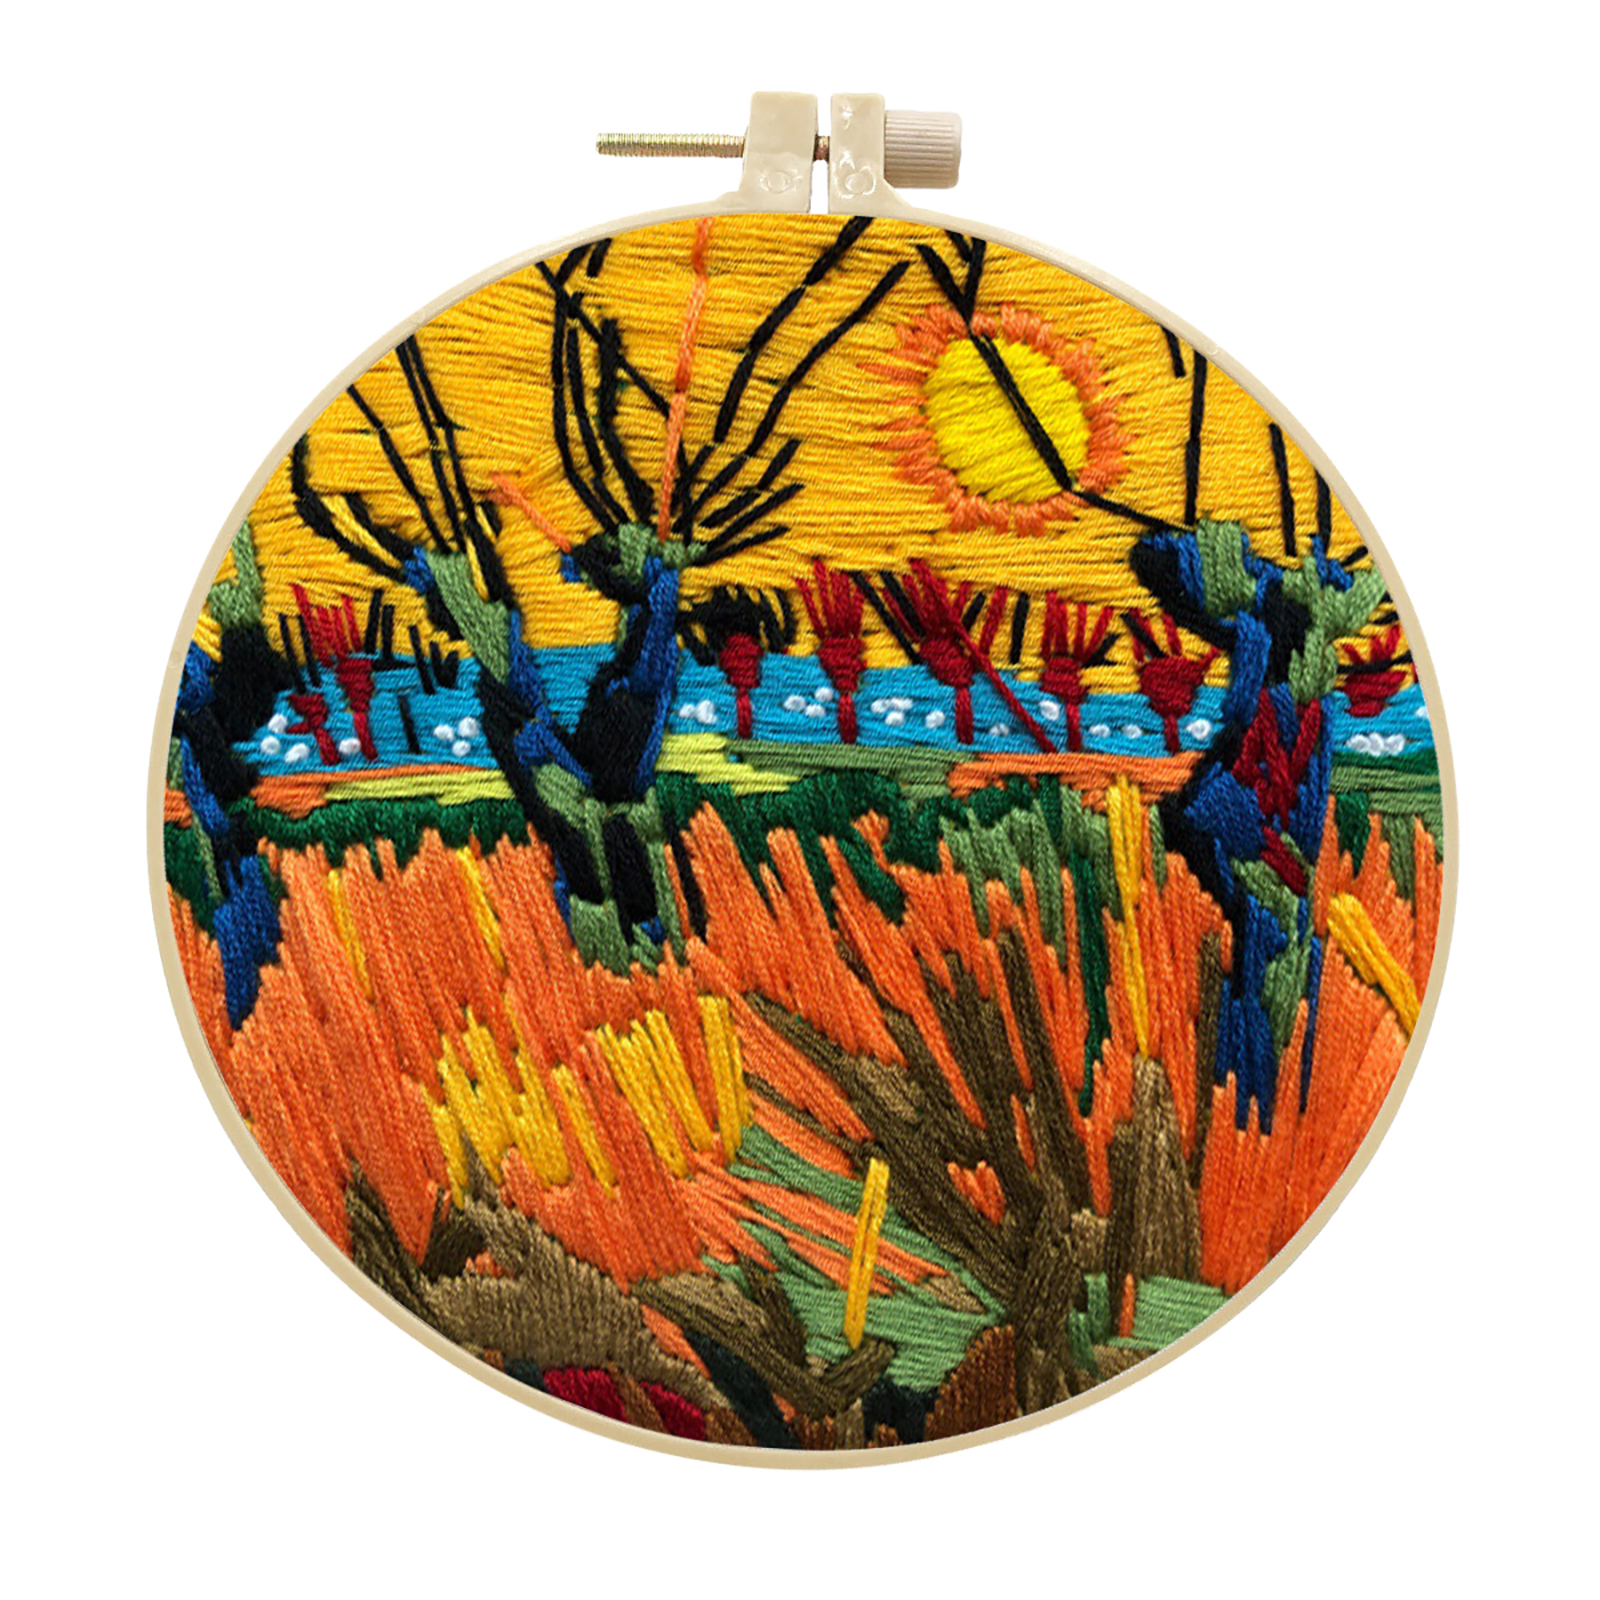 Handmade Embroidery Kit Cross stitch kit for Adult Beginner - To Love Van Gogh Pattern